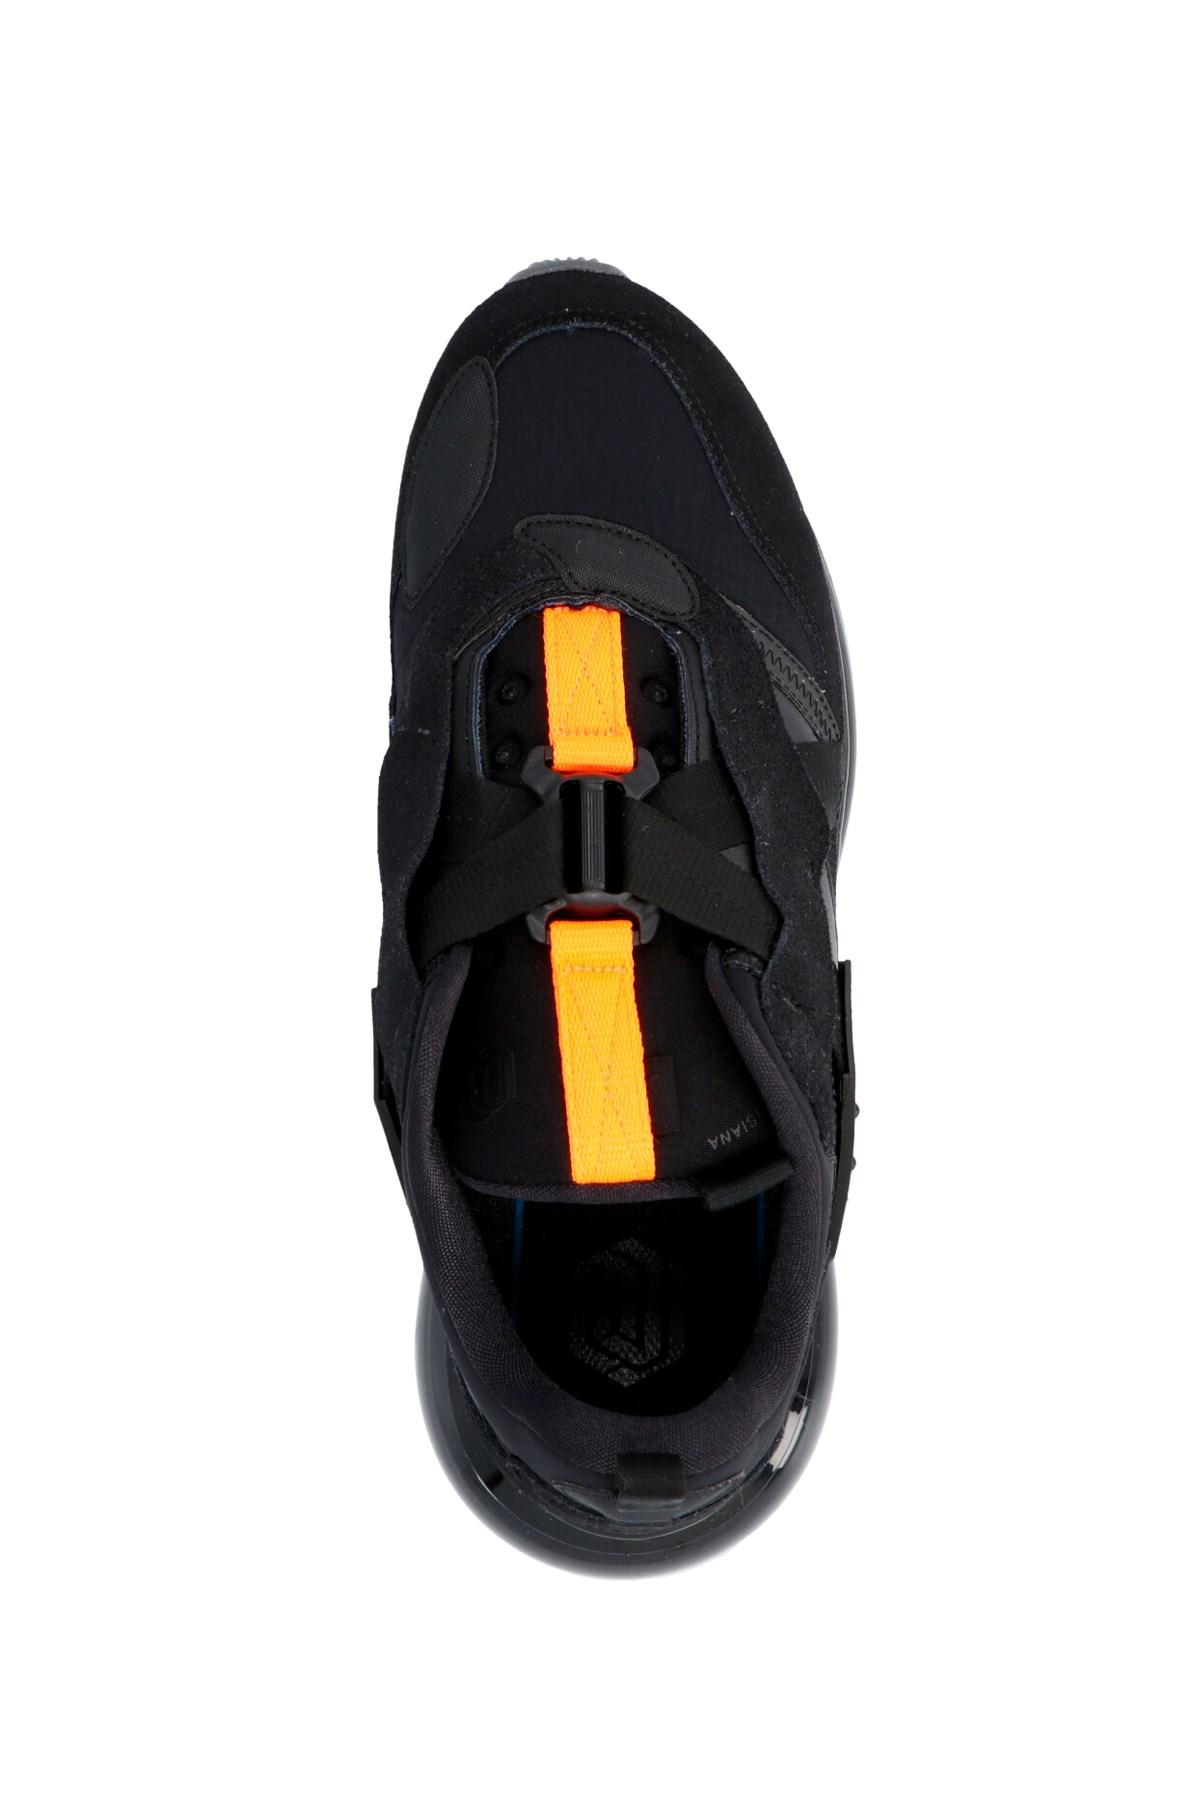 Nike 'airmax 70' Sneakers in Black for Men - Lyst